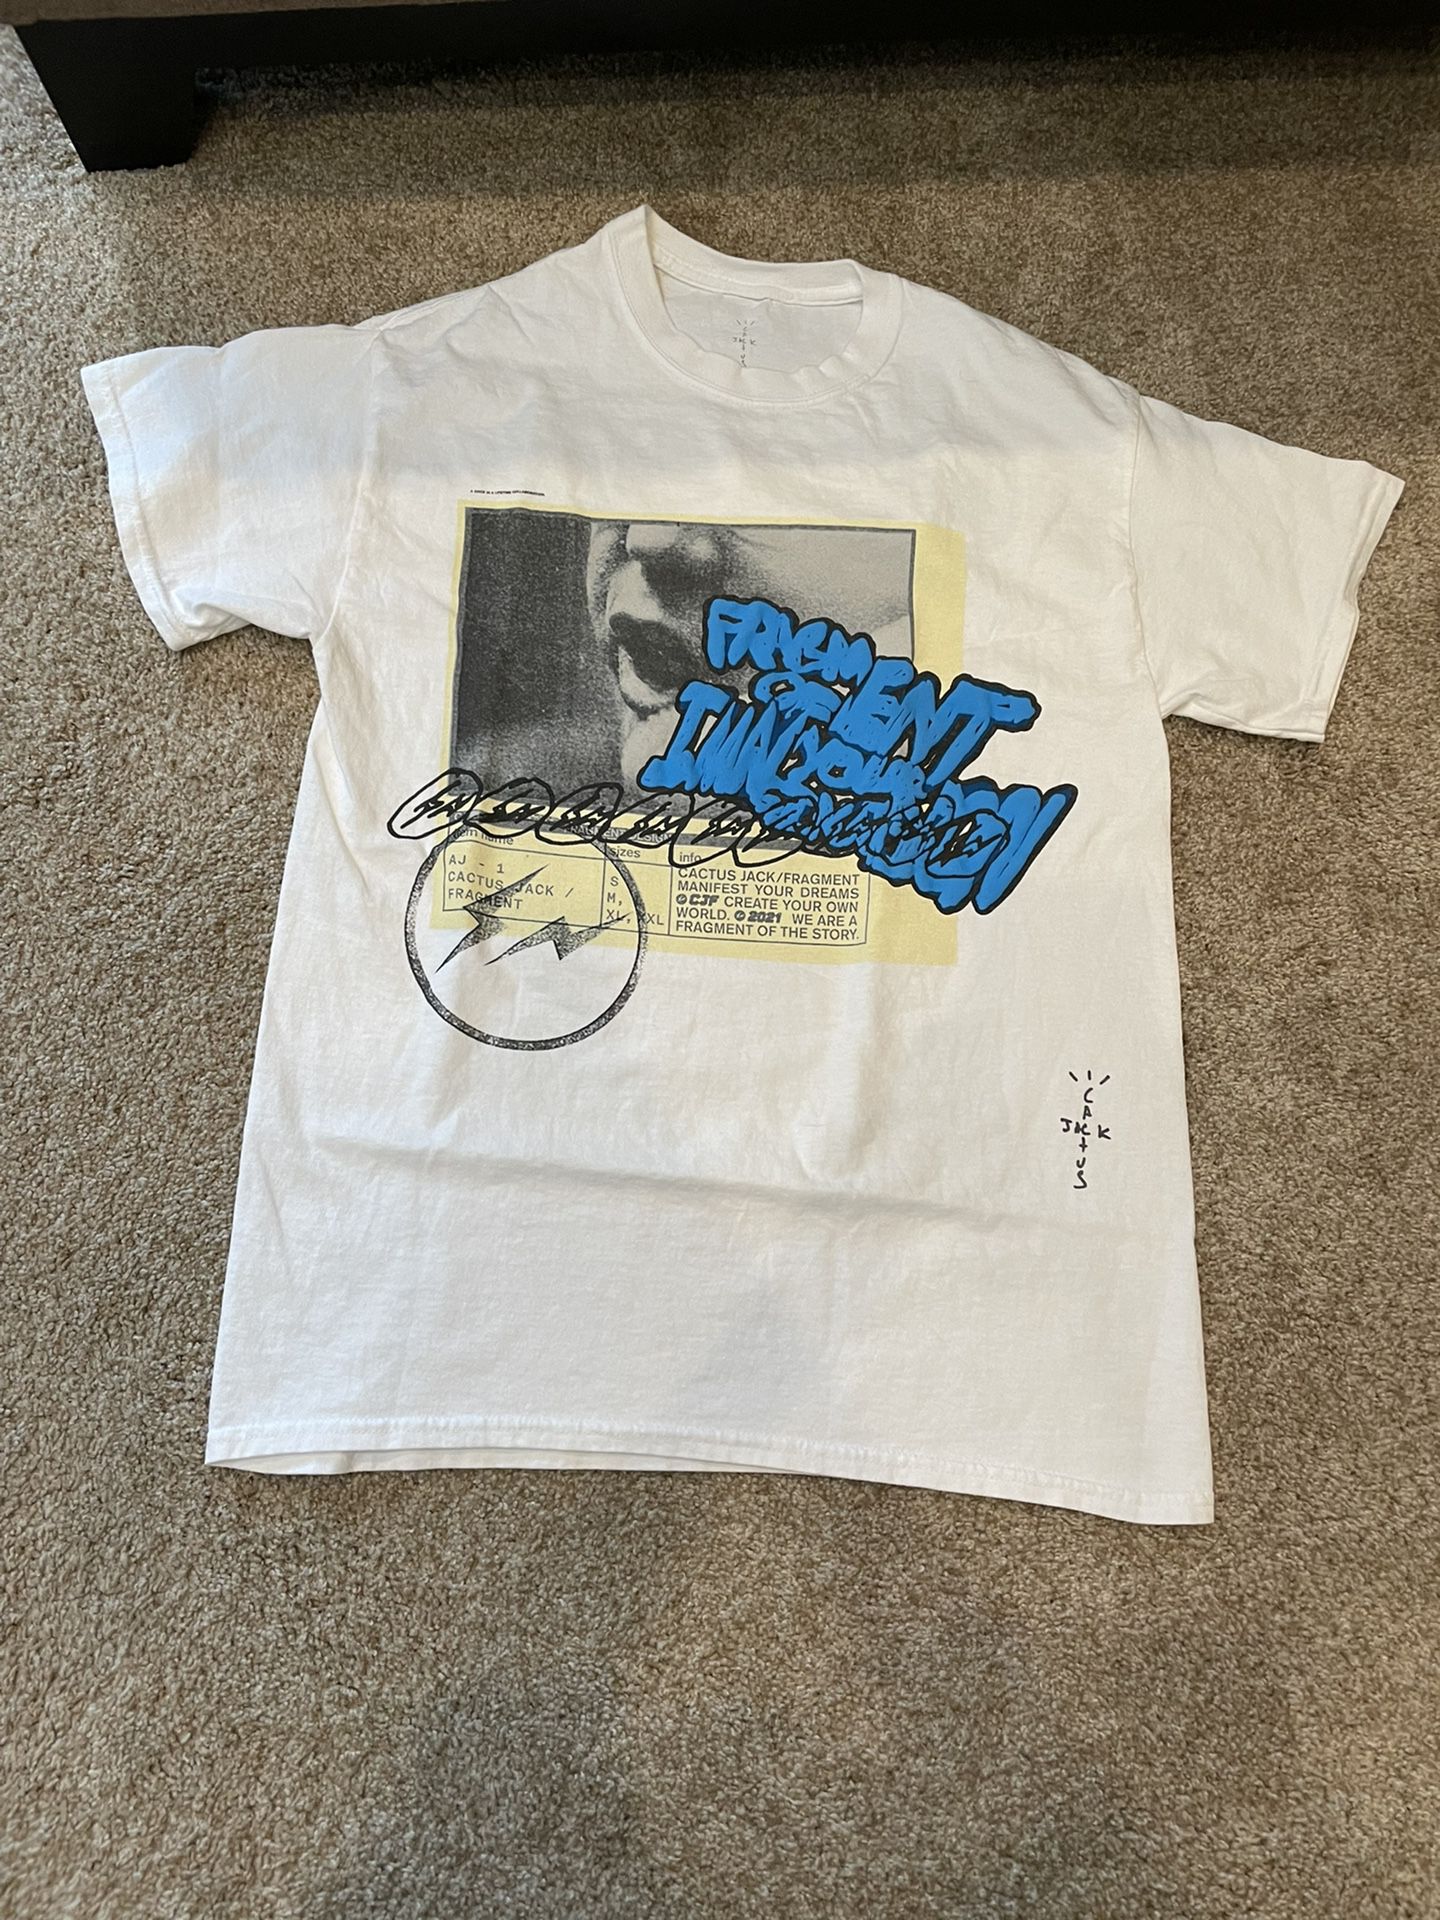 Travis Scott Cactus Jack For Fragment Manifest T-Shirt, US Men's Small for  Sale in Pasadena, California - OfferUp